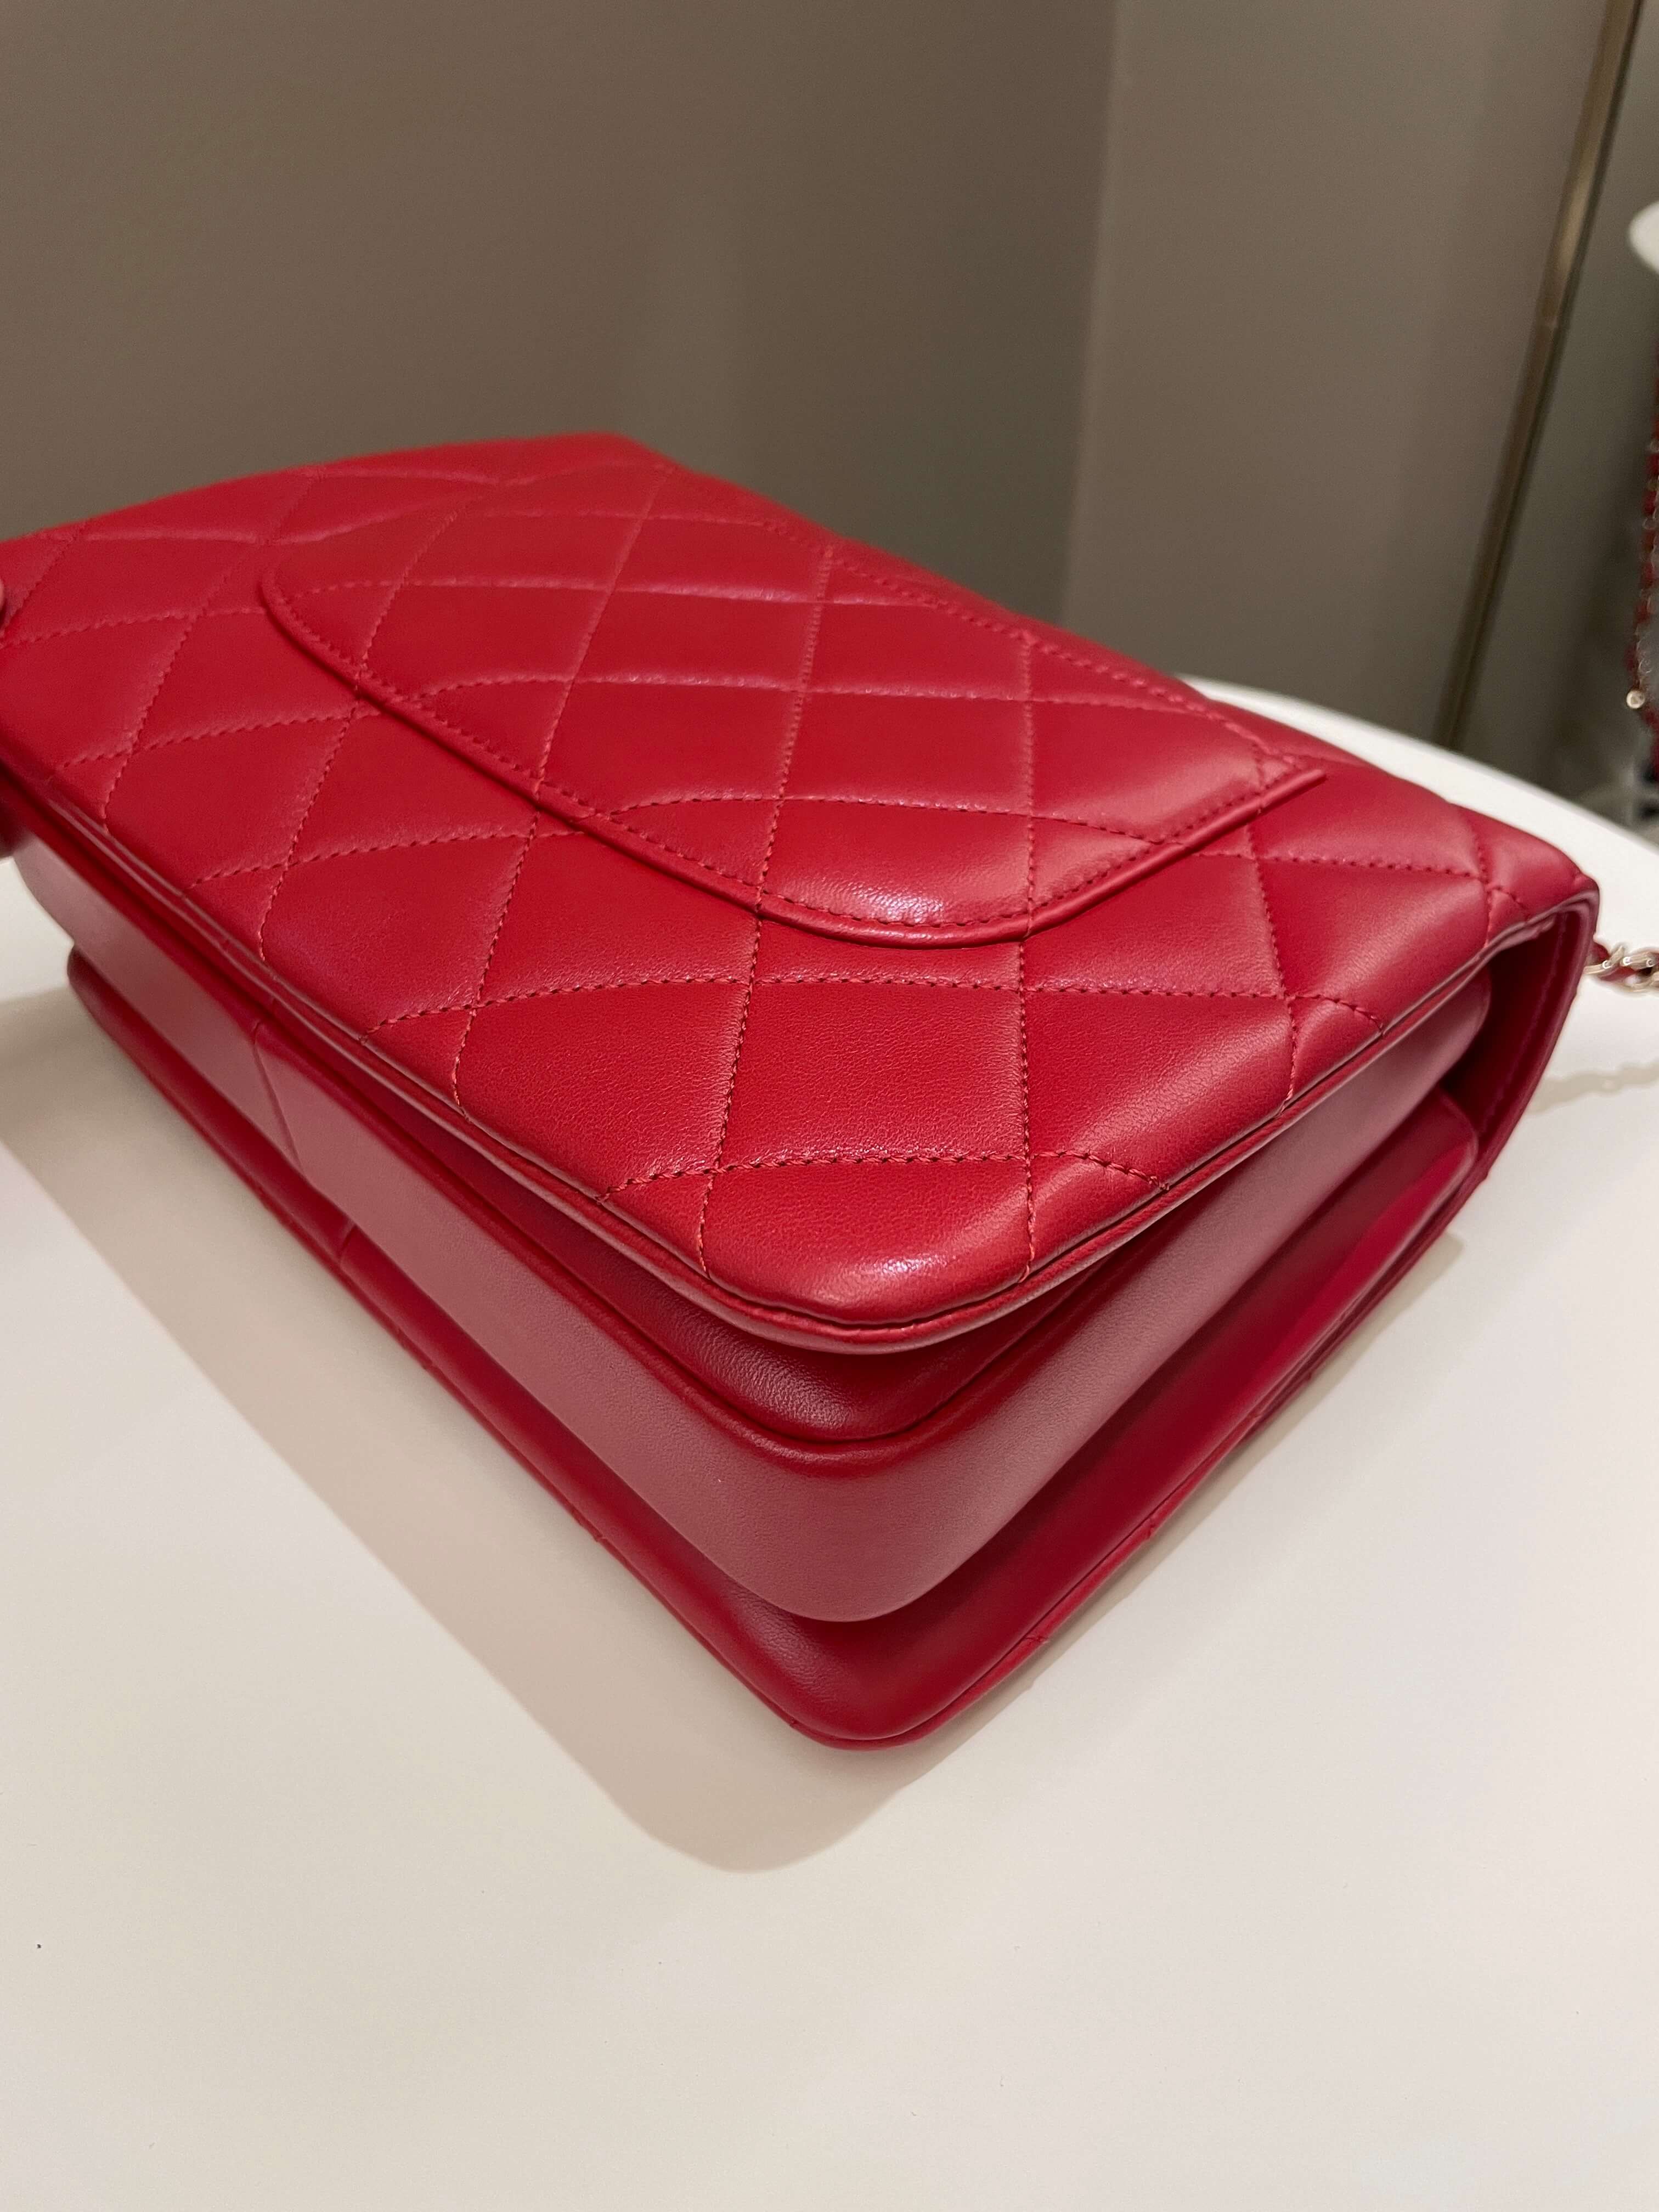 Chanel Trendy Cc Flap Bag Red Stiff Lambskin